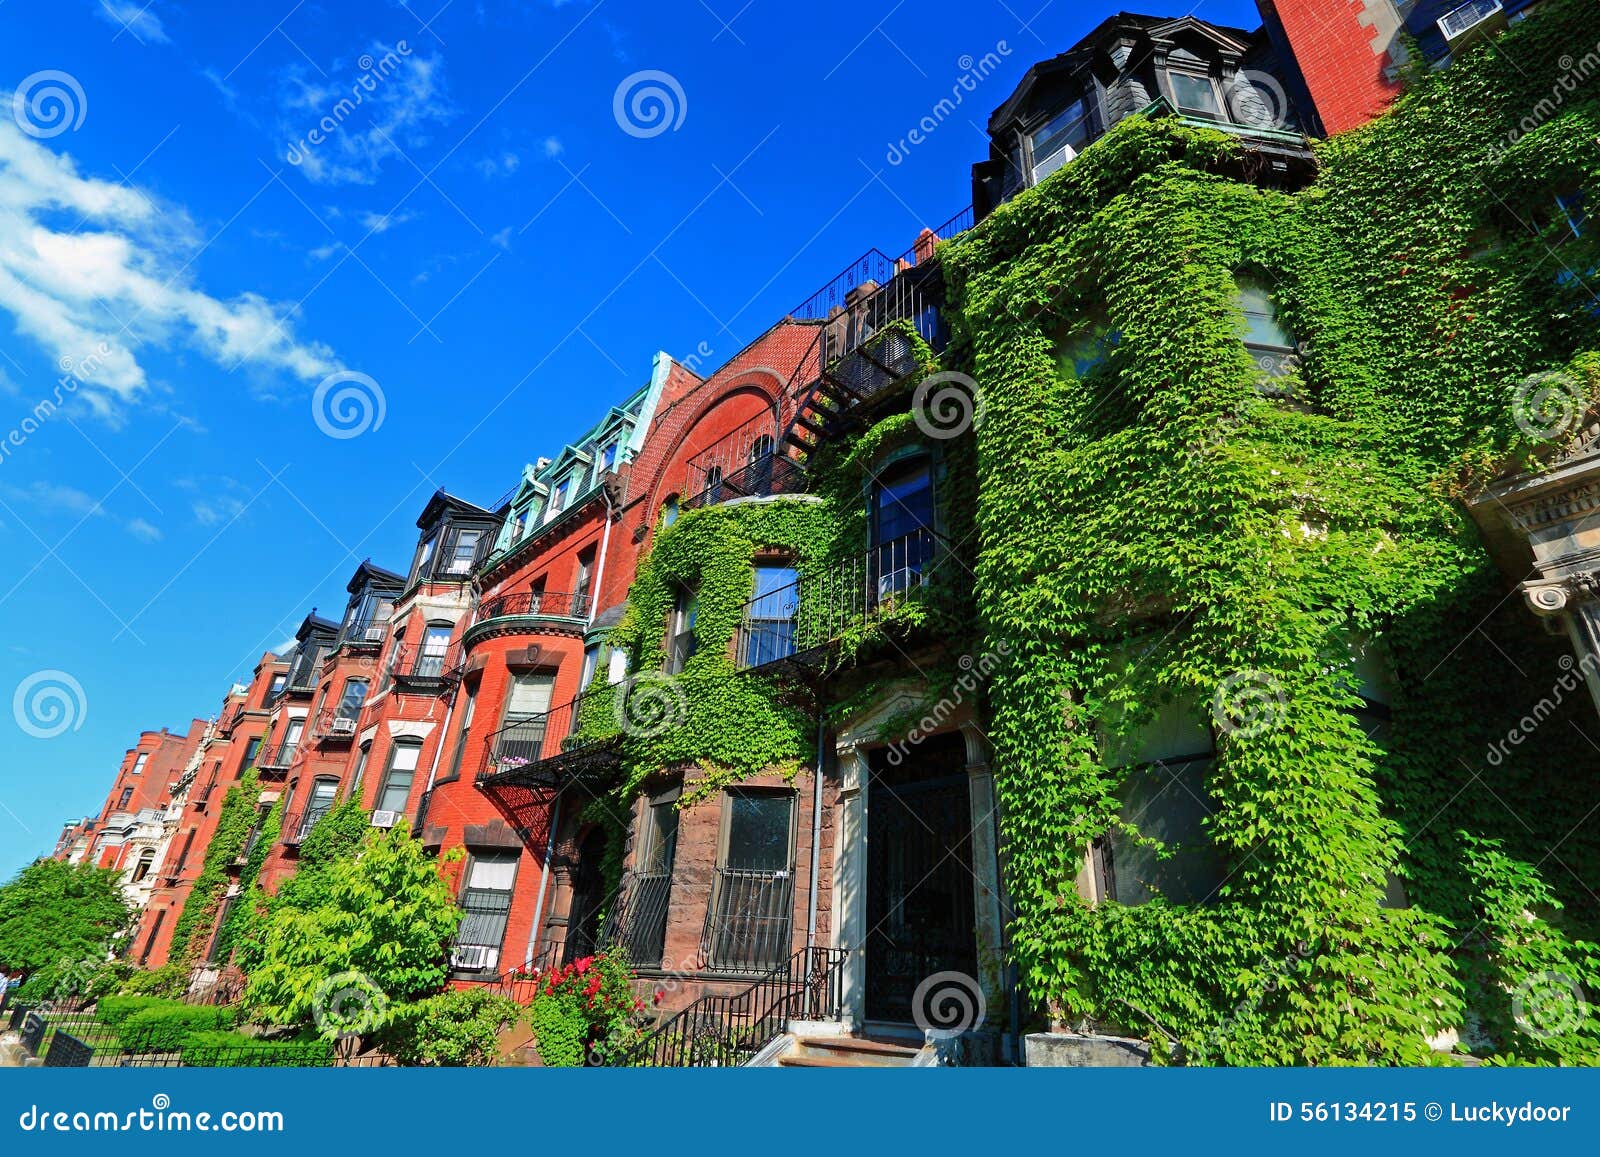 boston historic housing